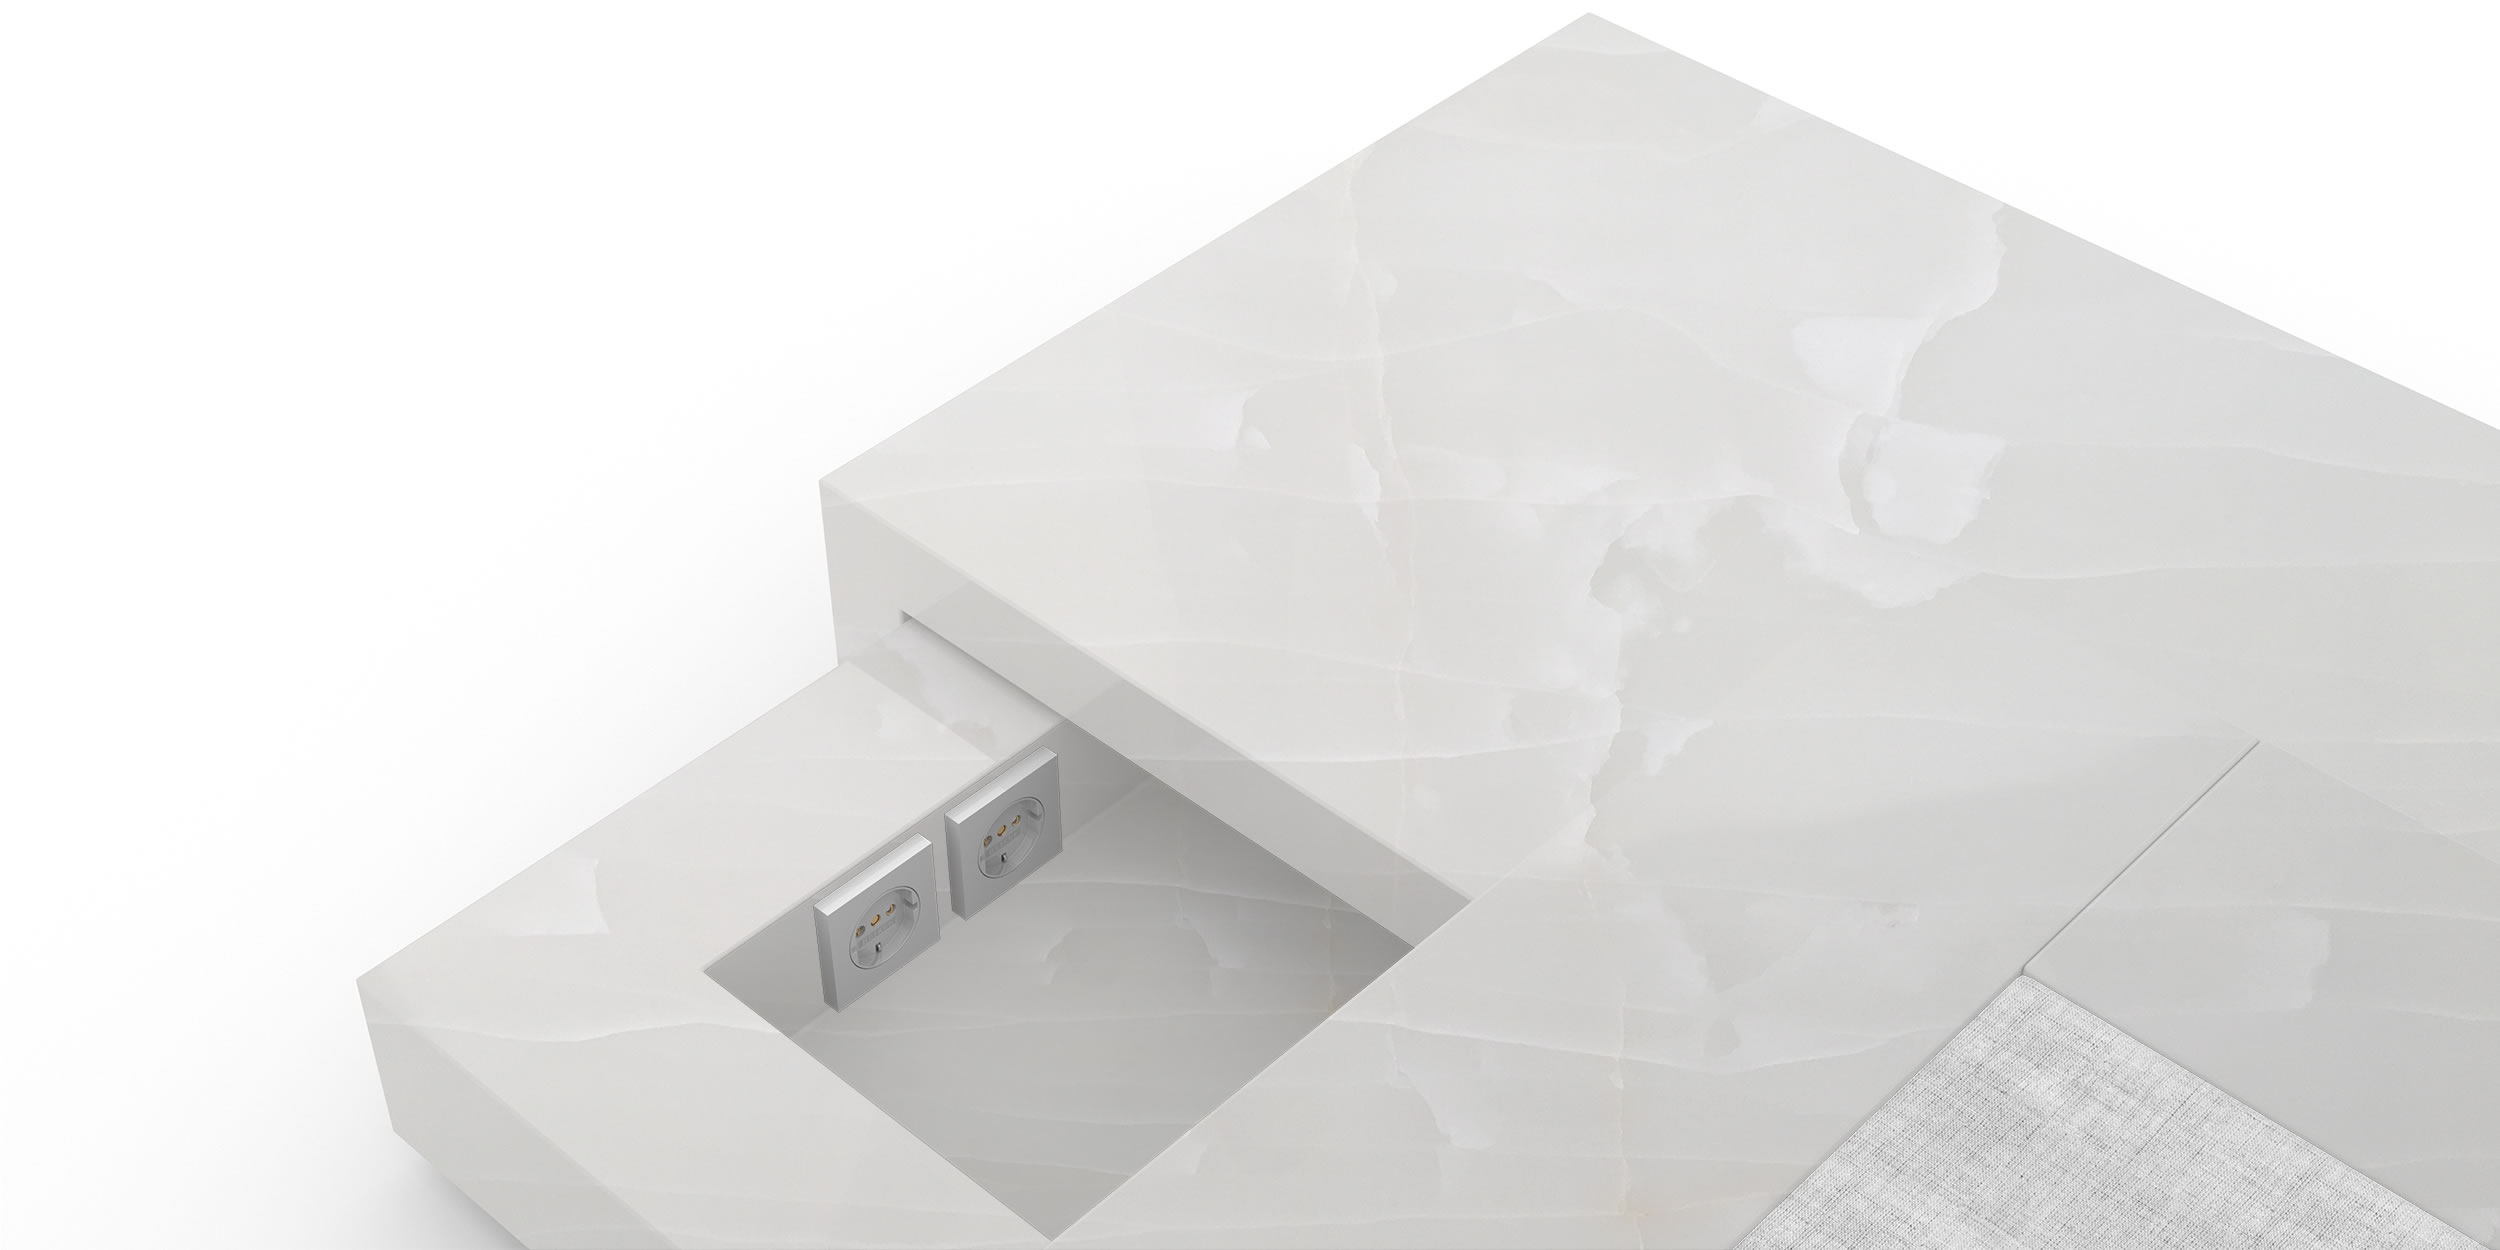 Design Bed Nightstand Drawer Marble White Exclusive Elegant Custom Made InteriorFELIX SCHWAKE